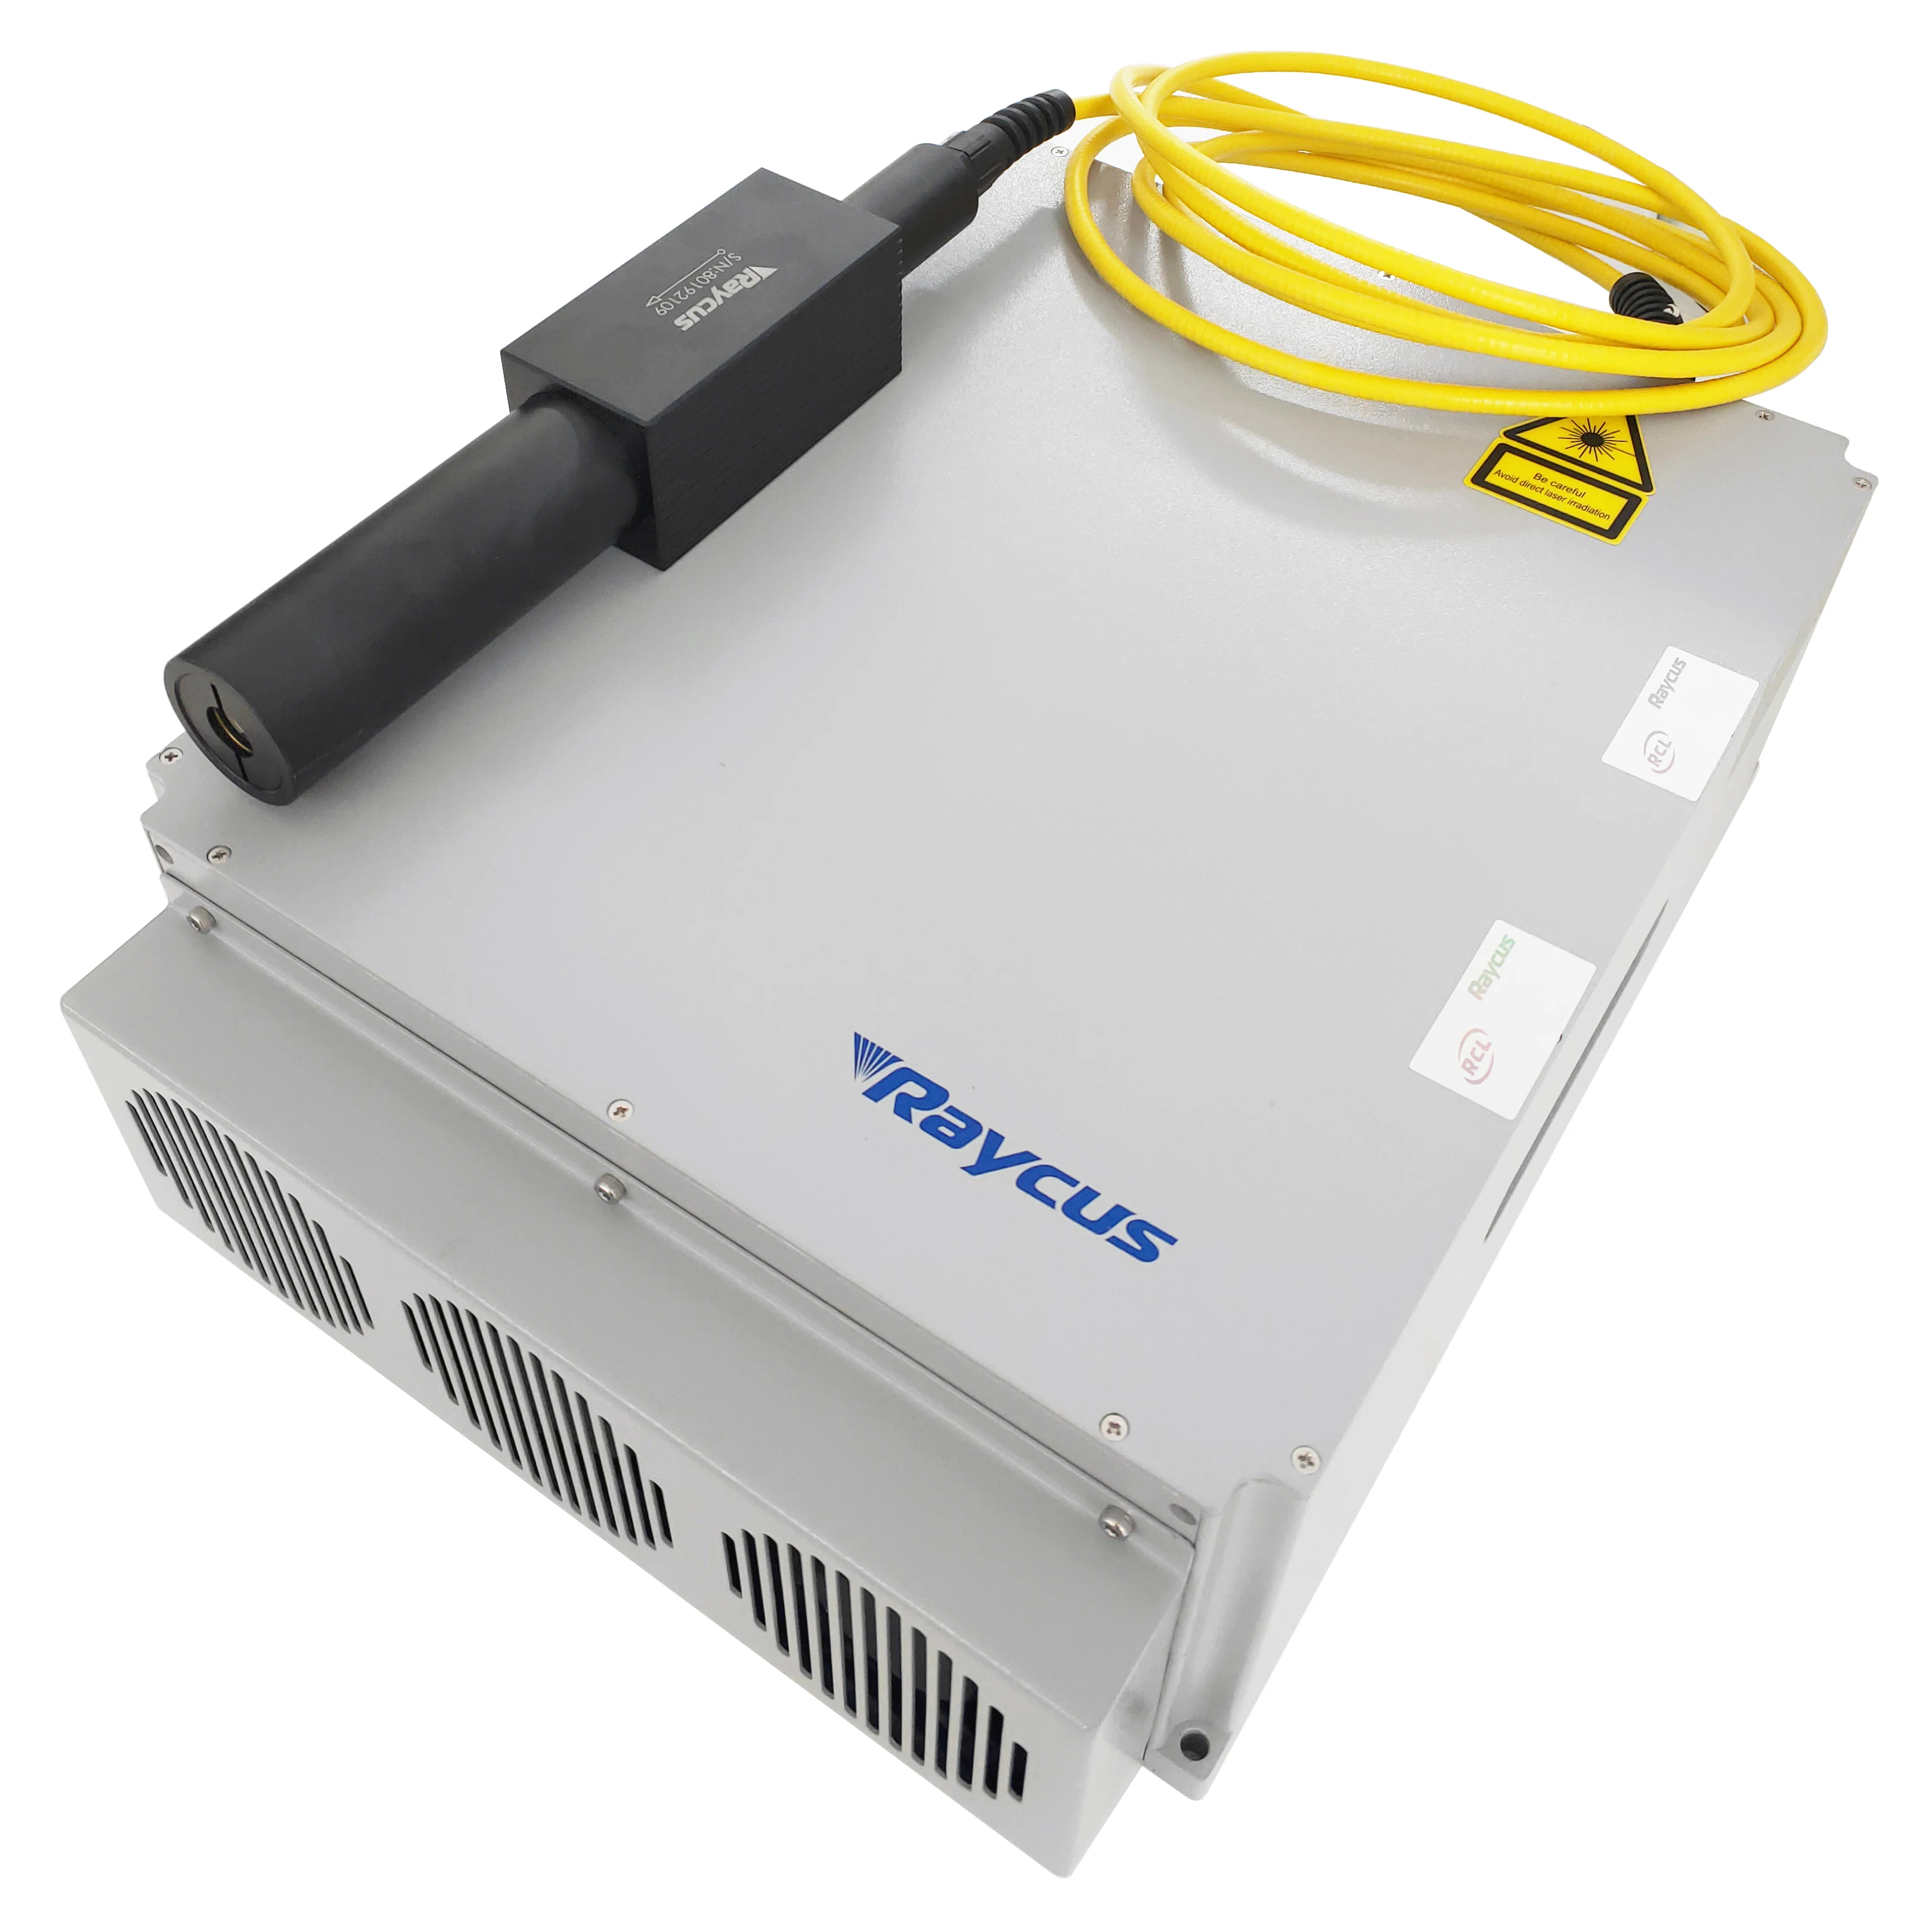 Laser Source Fiber Raycus Qb Model - Buy Source,50w Laser Source,Laser Raycus Product on